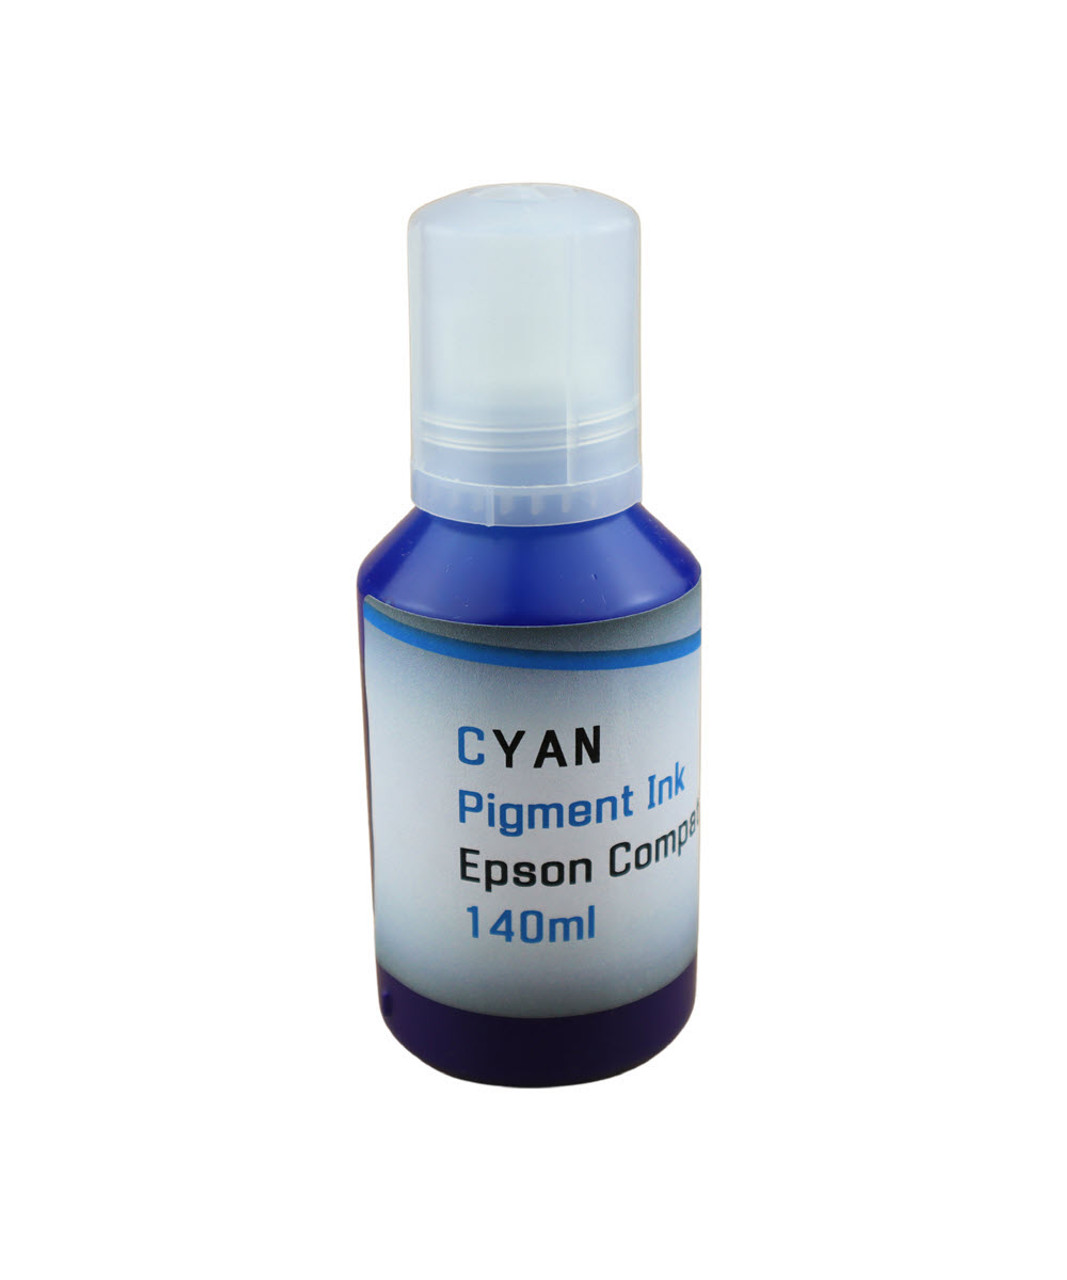 Cyan Pigment Ink 140ml Bottle for Epson EcoTank ET-2700 ET-2750 ET-3700 Printer
